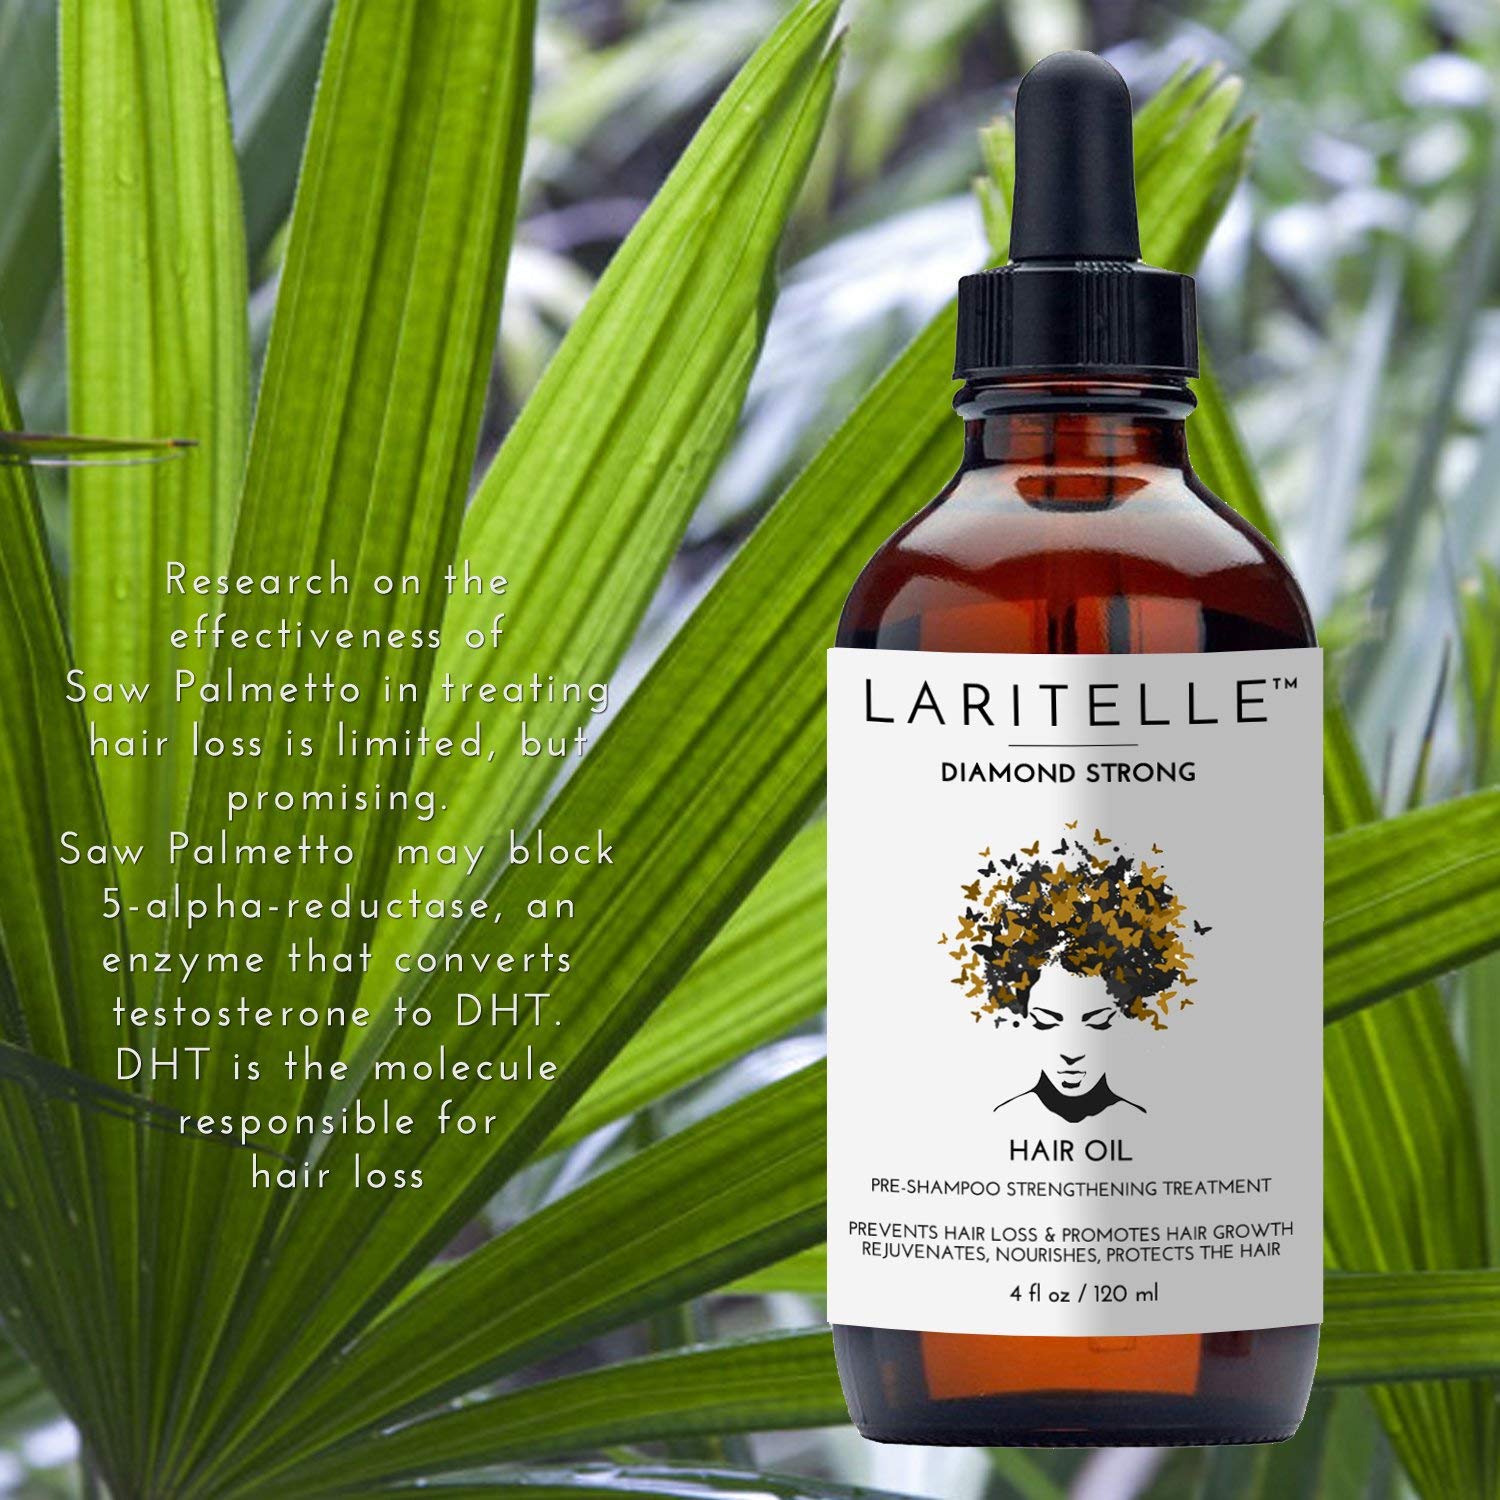 Laritelle Organic Hair Growth Set | Shampoo 17 oz + Conditioner 16 oz + Hair Loss Treatment 4 oz | Argan Oil, Rosemary, Ginger & Cedarwood | NO GMO, Sulfates, Gluten, Alcohol, Parabens, Phthalates